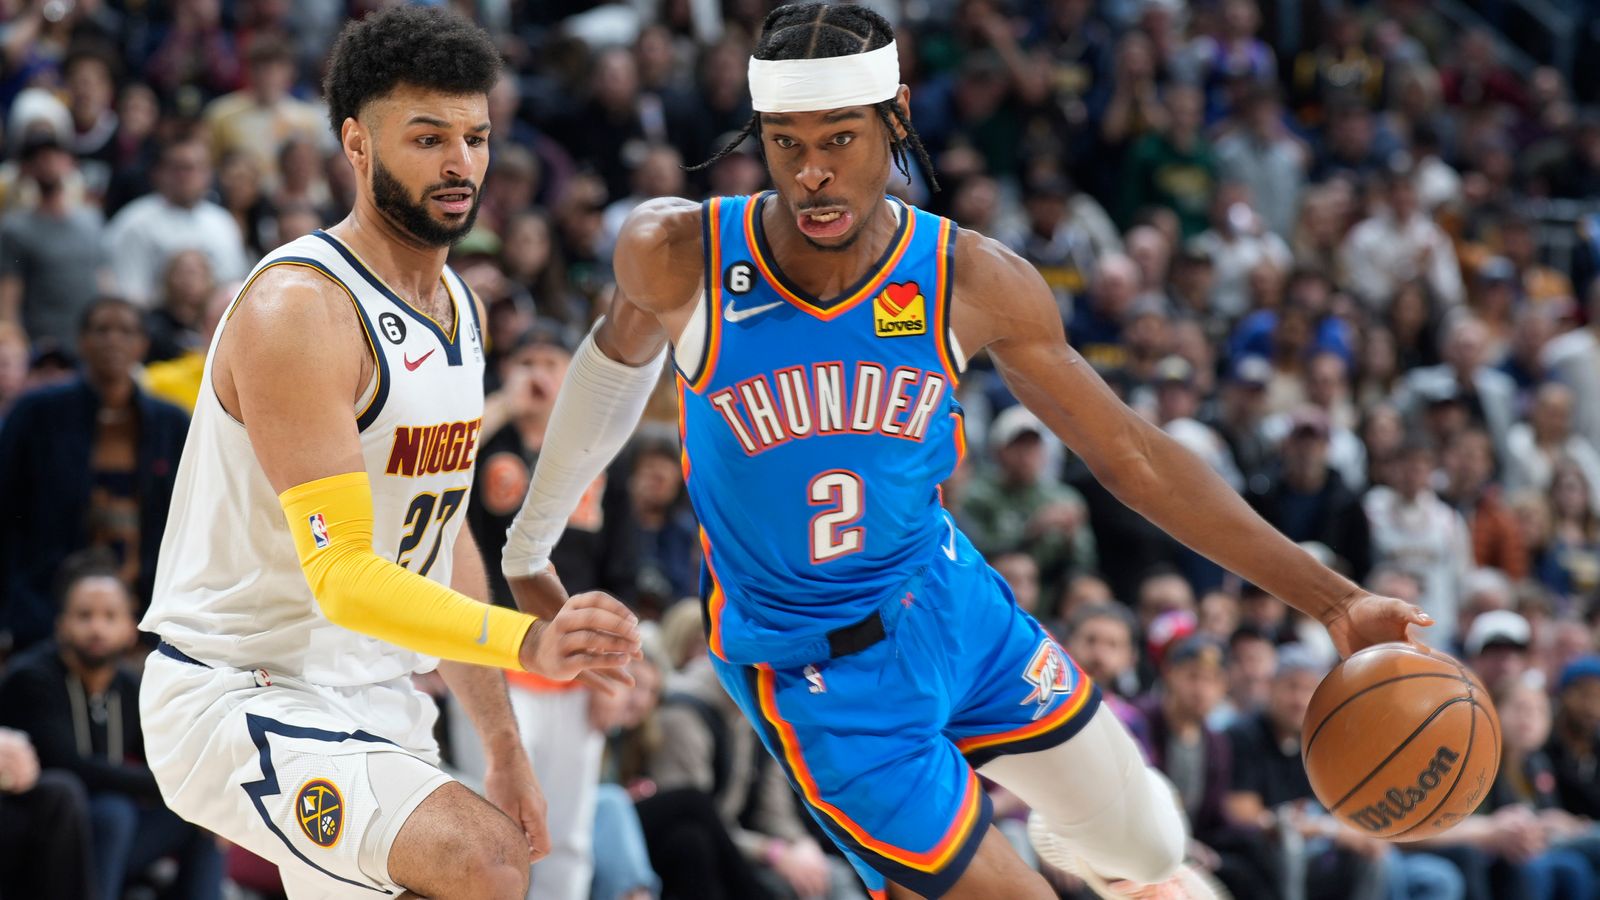 NBA round-up: Oklahoma City Thunder's Shai Gilgeous-Alexander snaps Denver Nuggets' win streak with 34 points